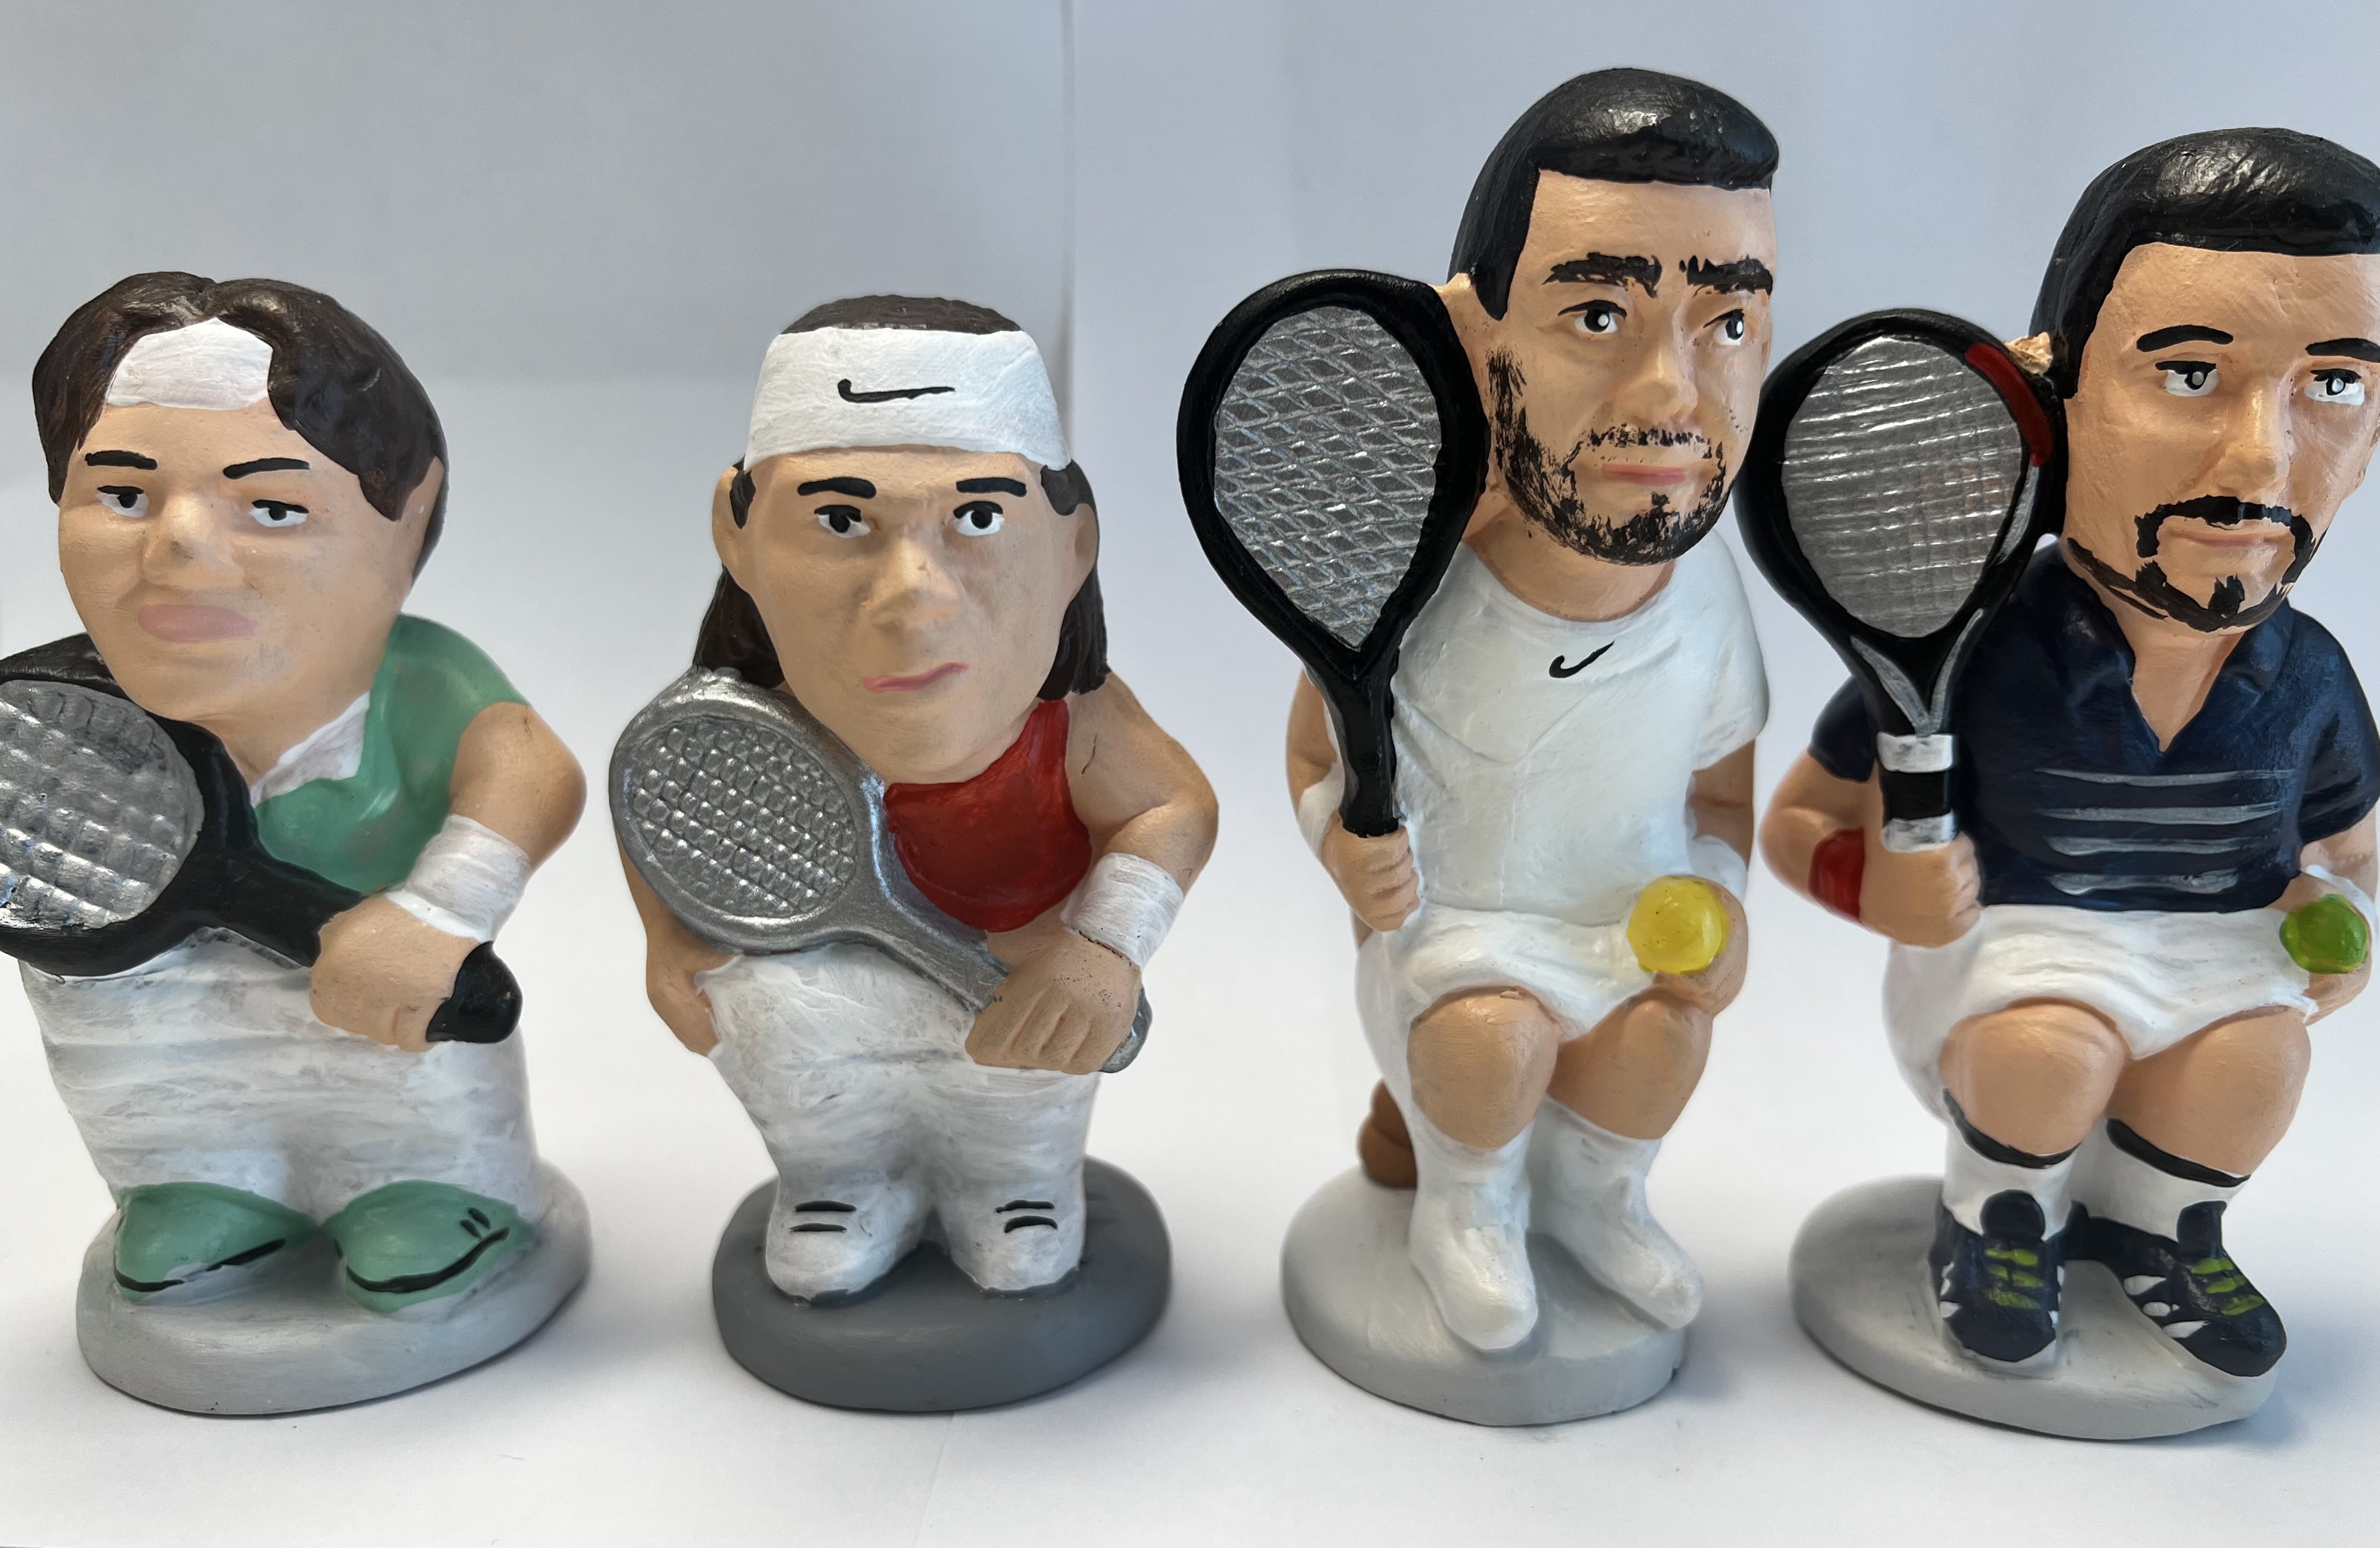 The caganer nativity scene figurines of tennis player Roger Federer, Rafael Nadal, Carlos Alcaraz, and Novak Djokovic